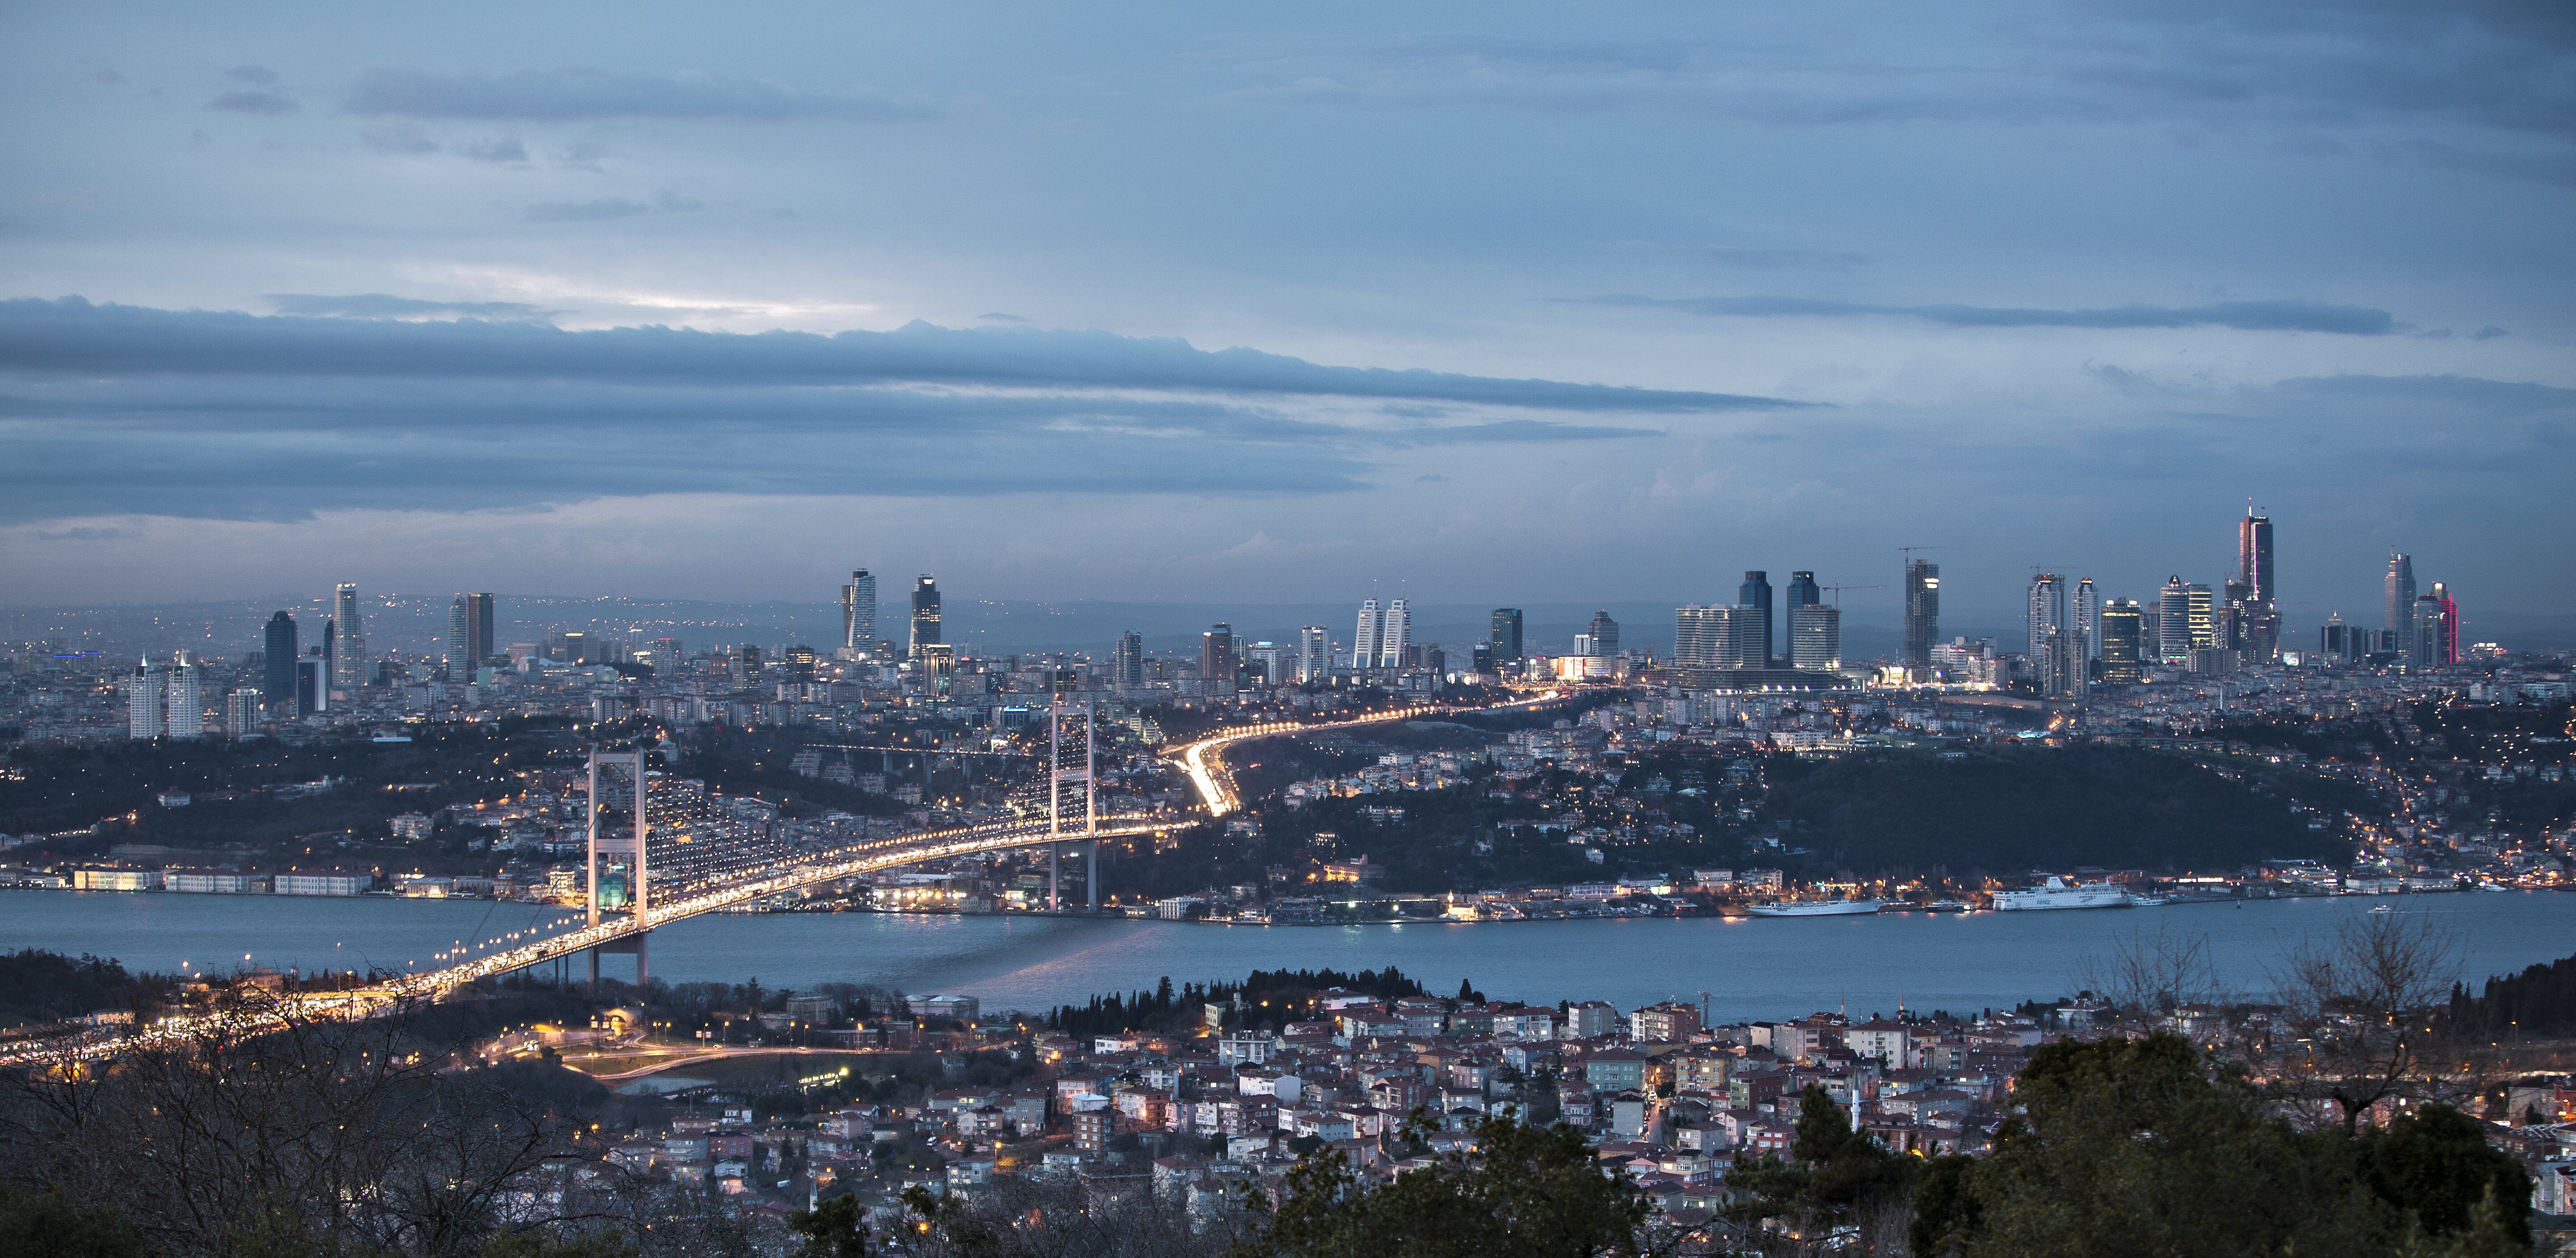 Bosphorus and bridge at night by ihsan Gercelman